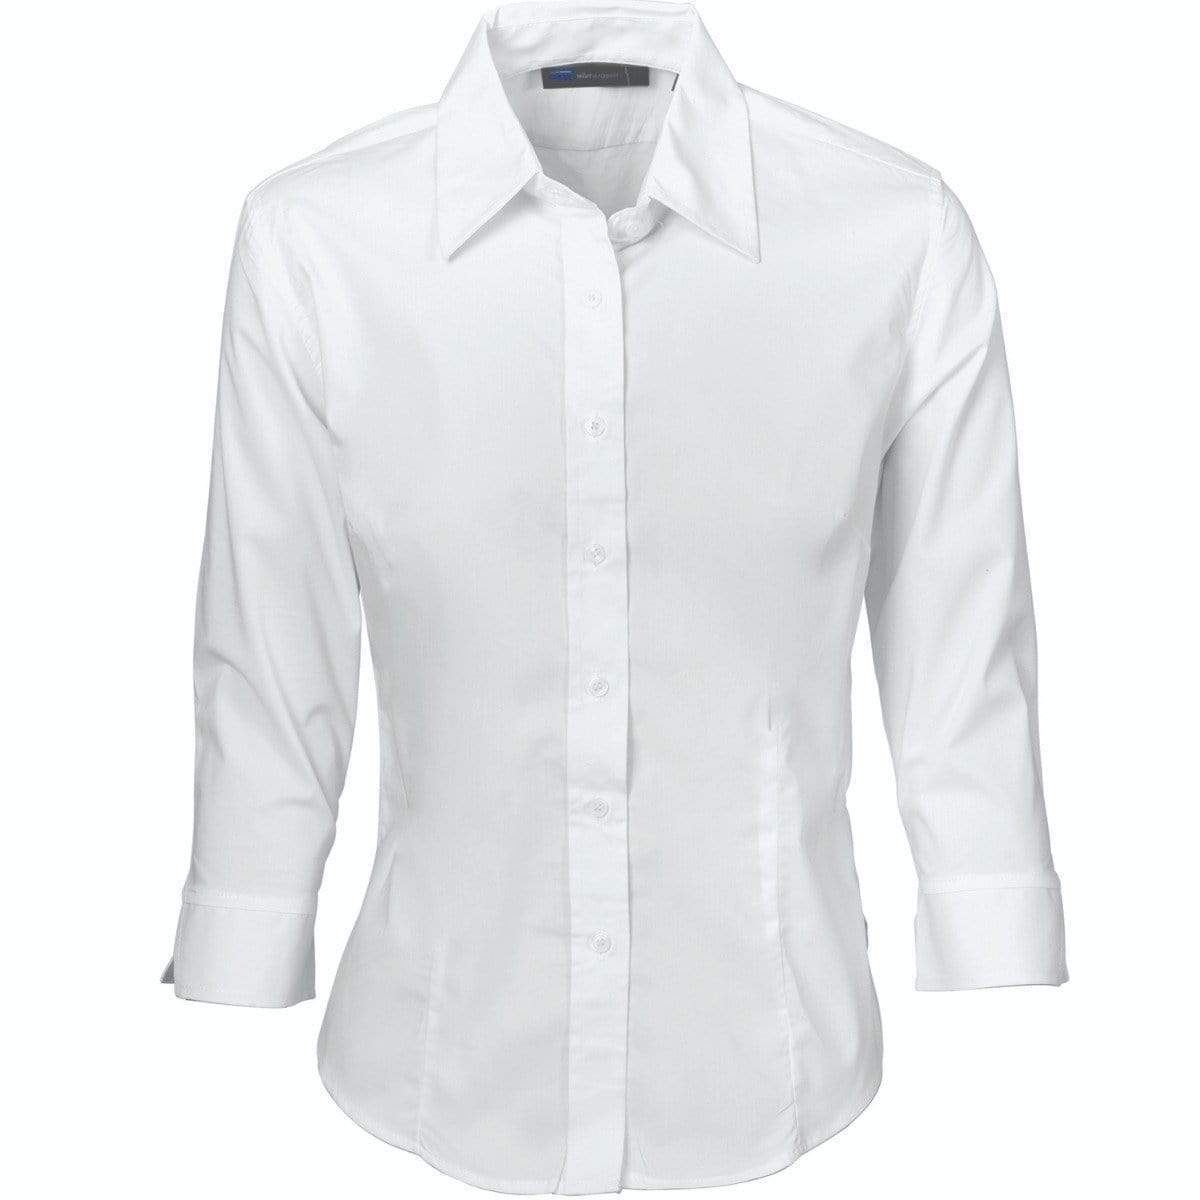 Dnc Workwear Ladies Polyester 3/4 Sleeve Cotton Shirt - 4203 Corporate Wear DNC Workwear White 6 